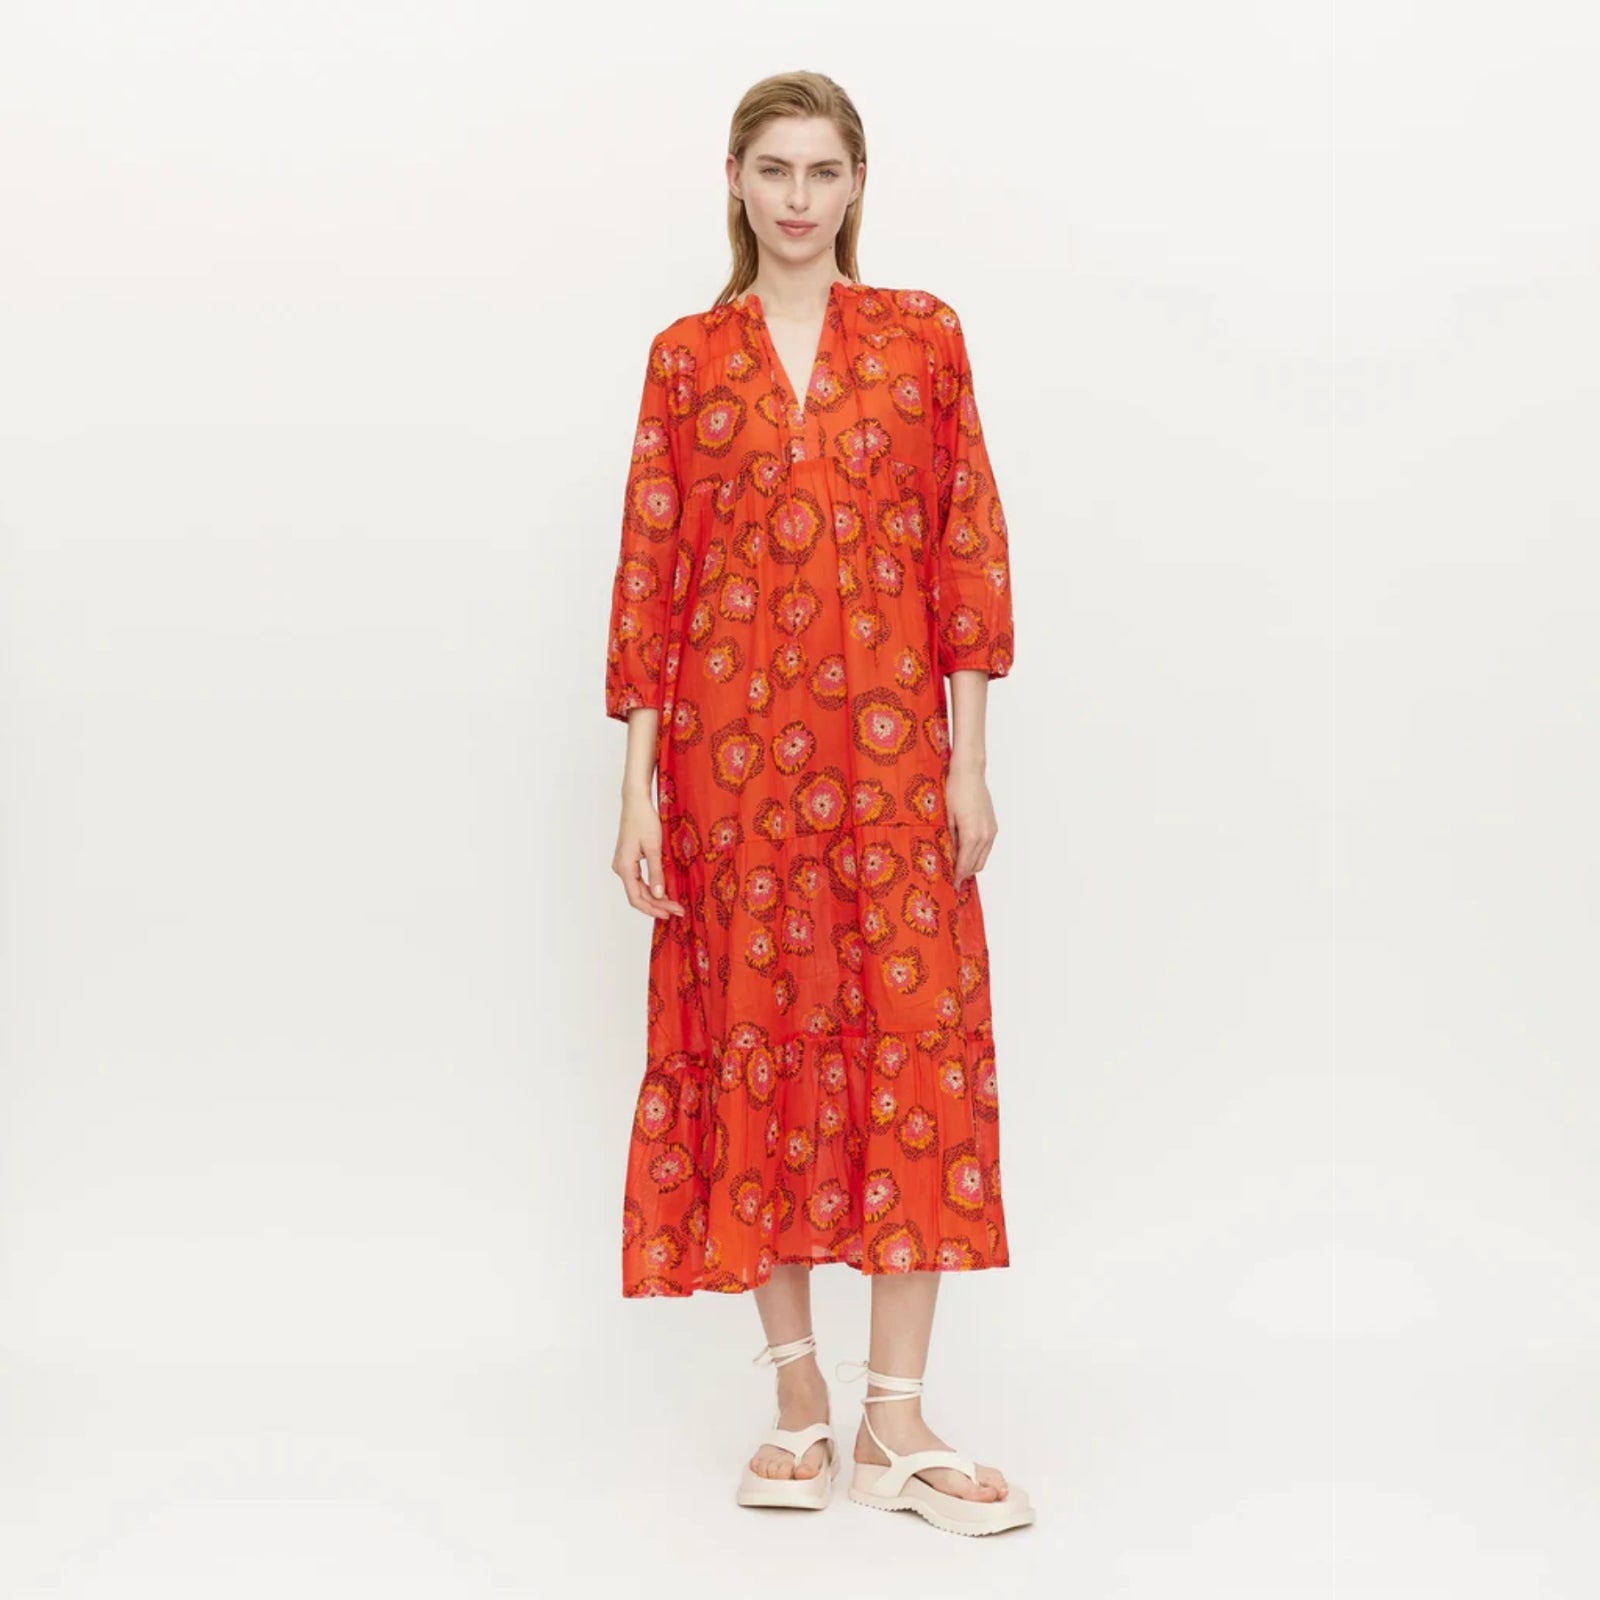 Compania Fantastica Long Dress - Flowers Red and Orange